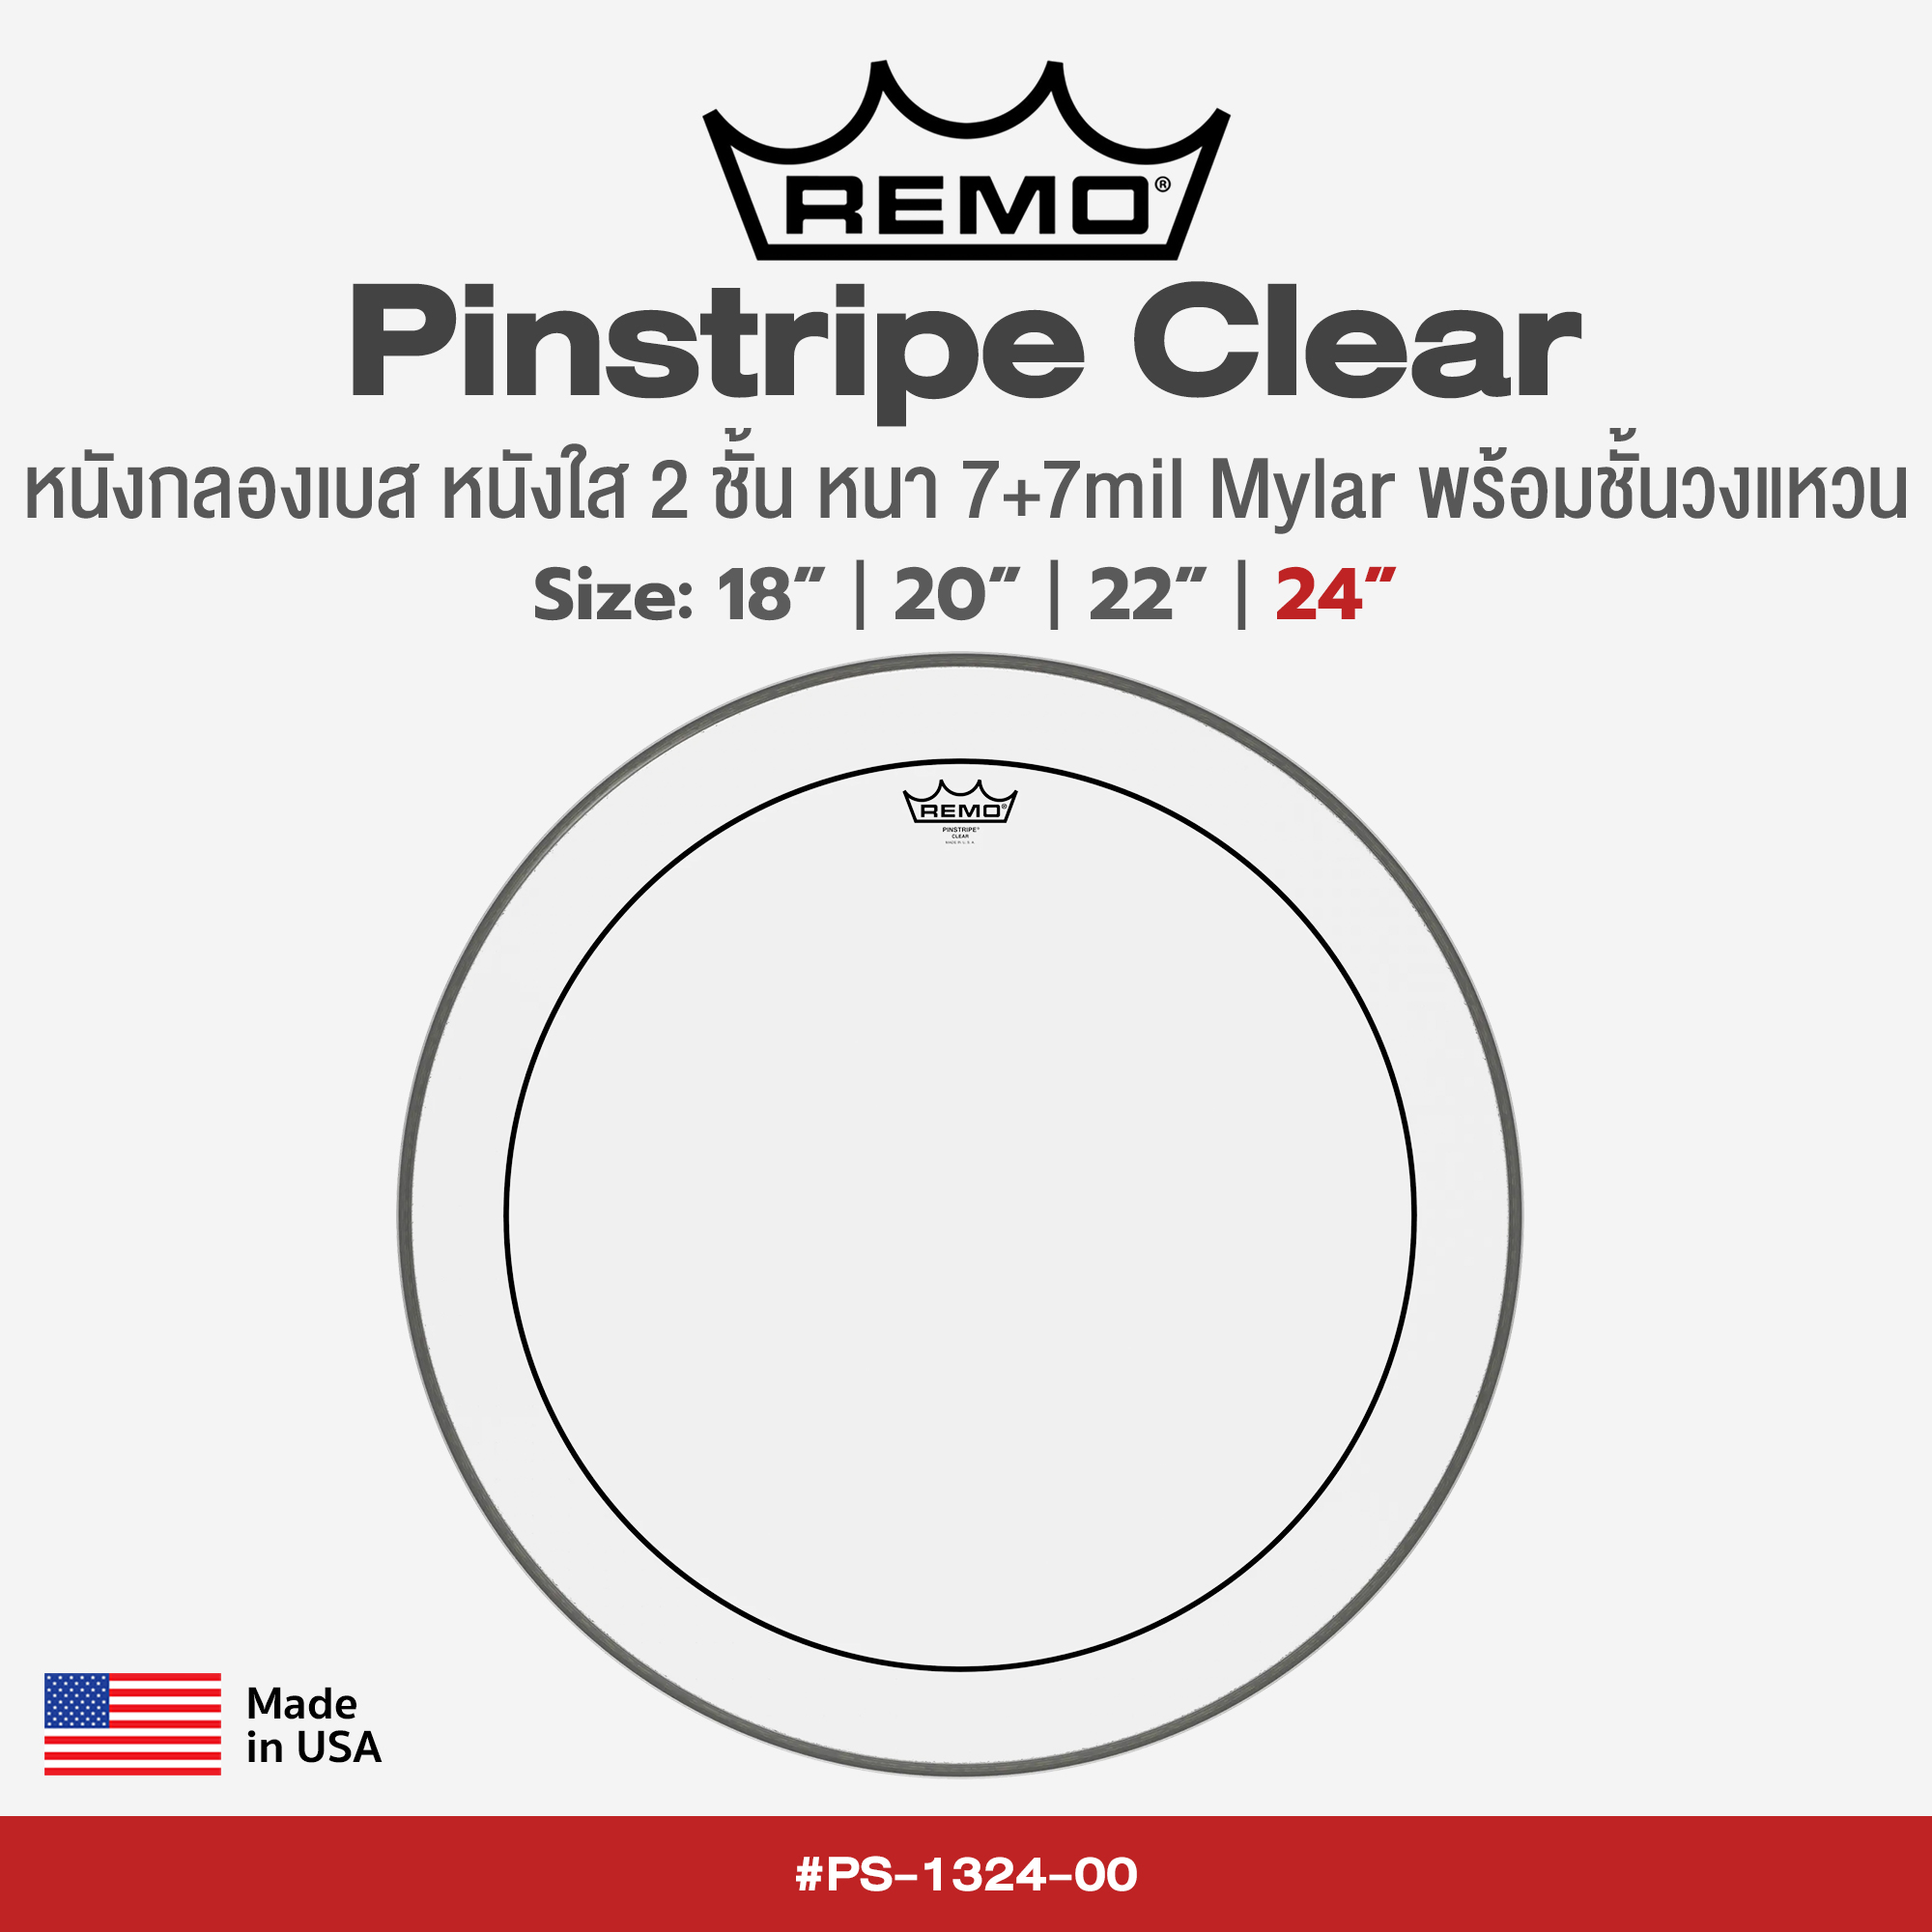 Remo Pinstripe Clear